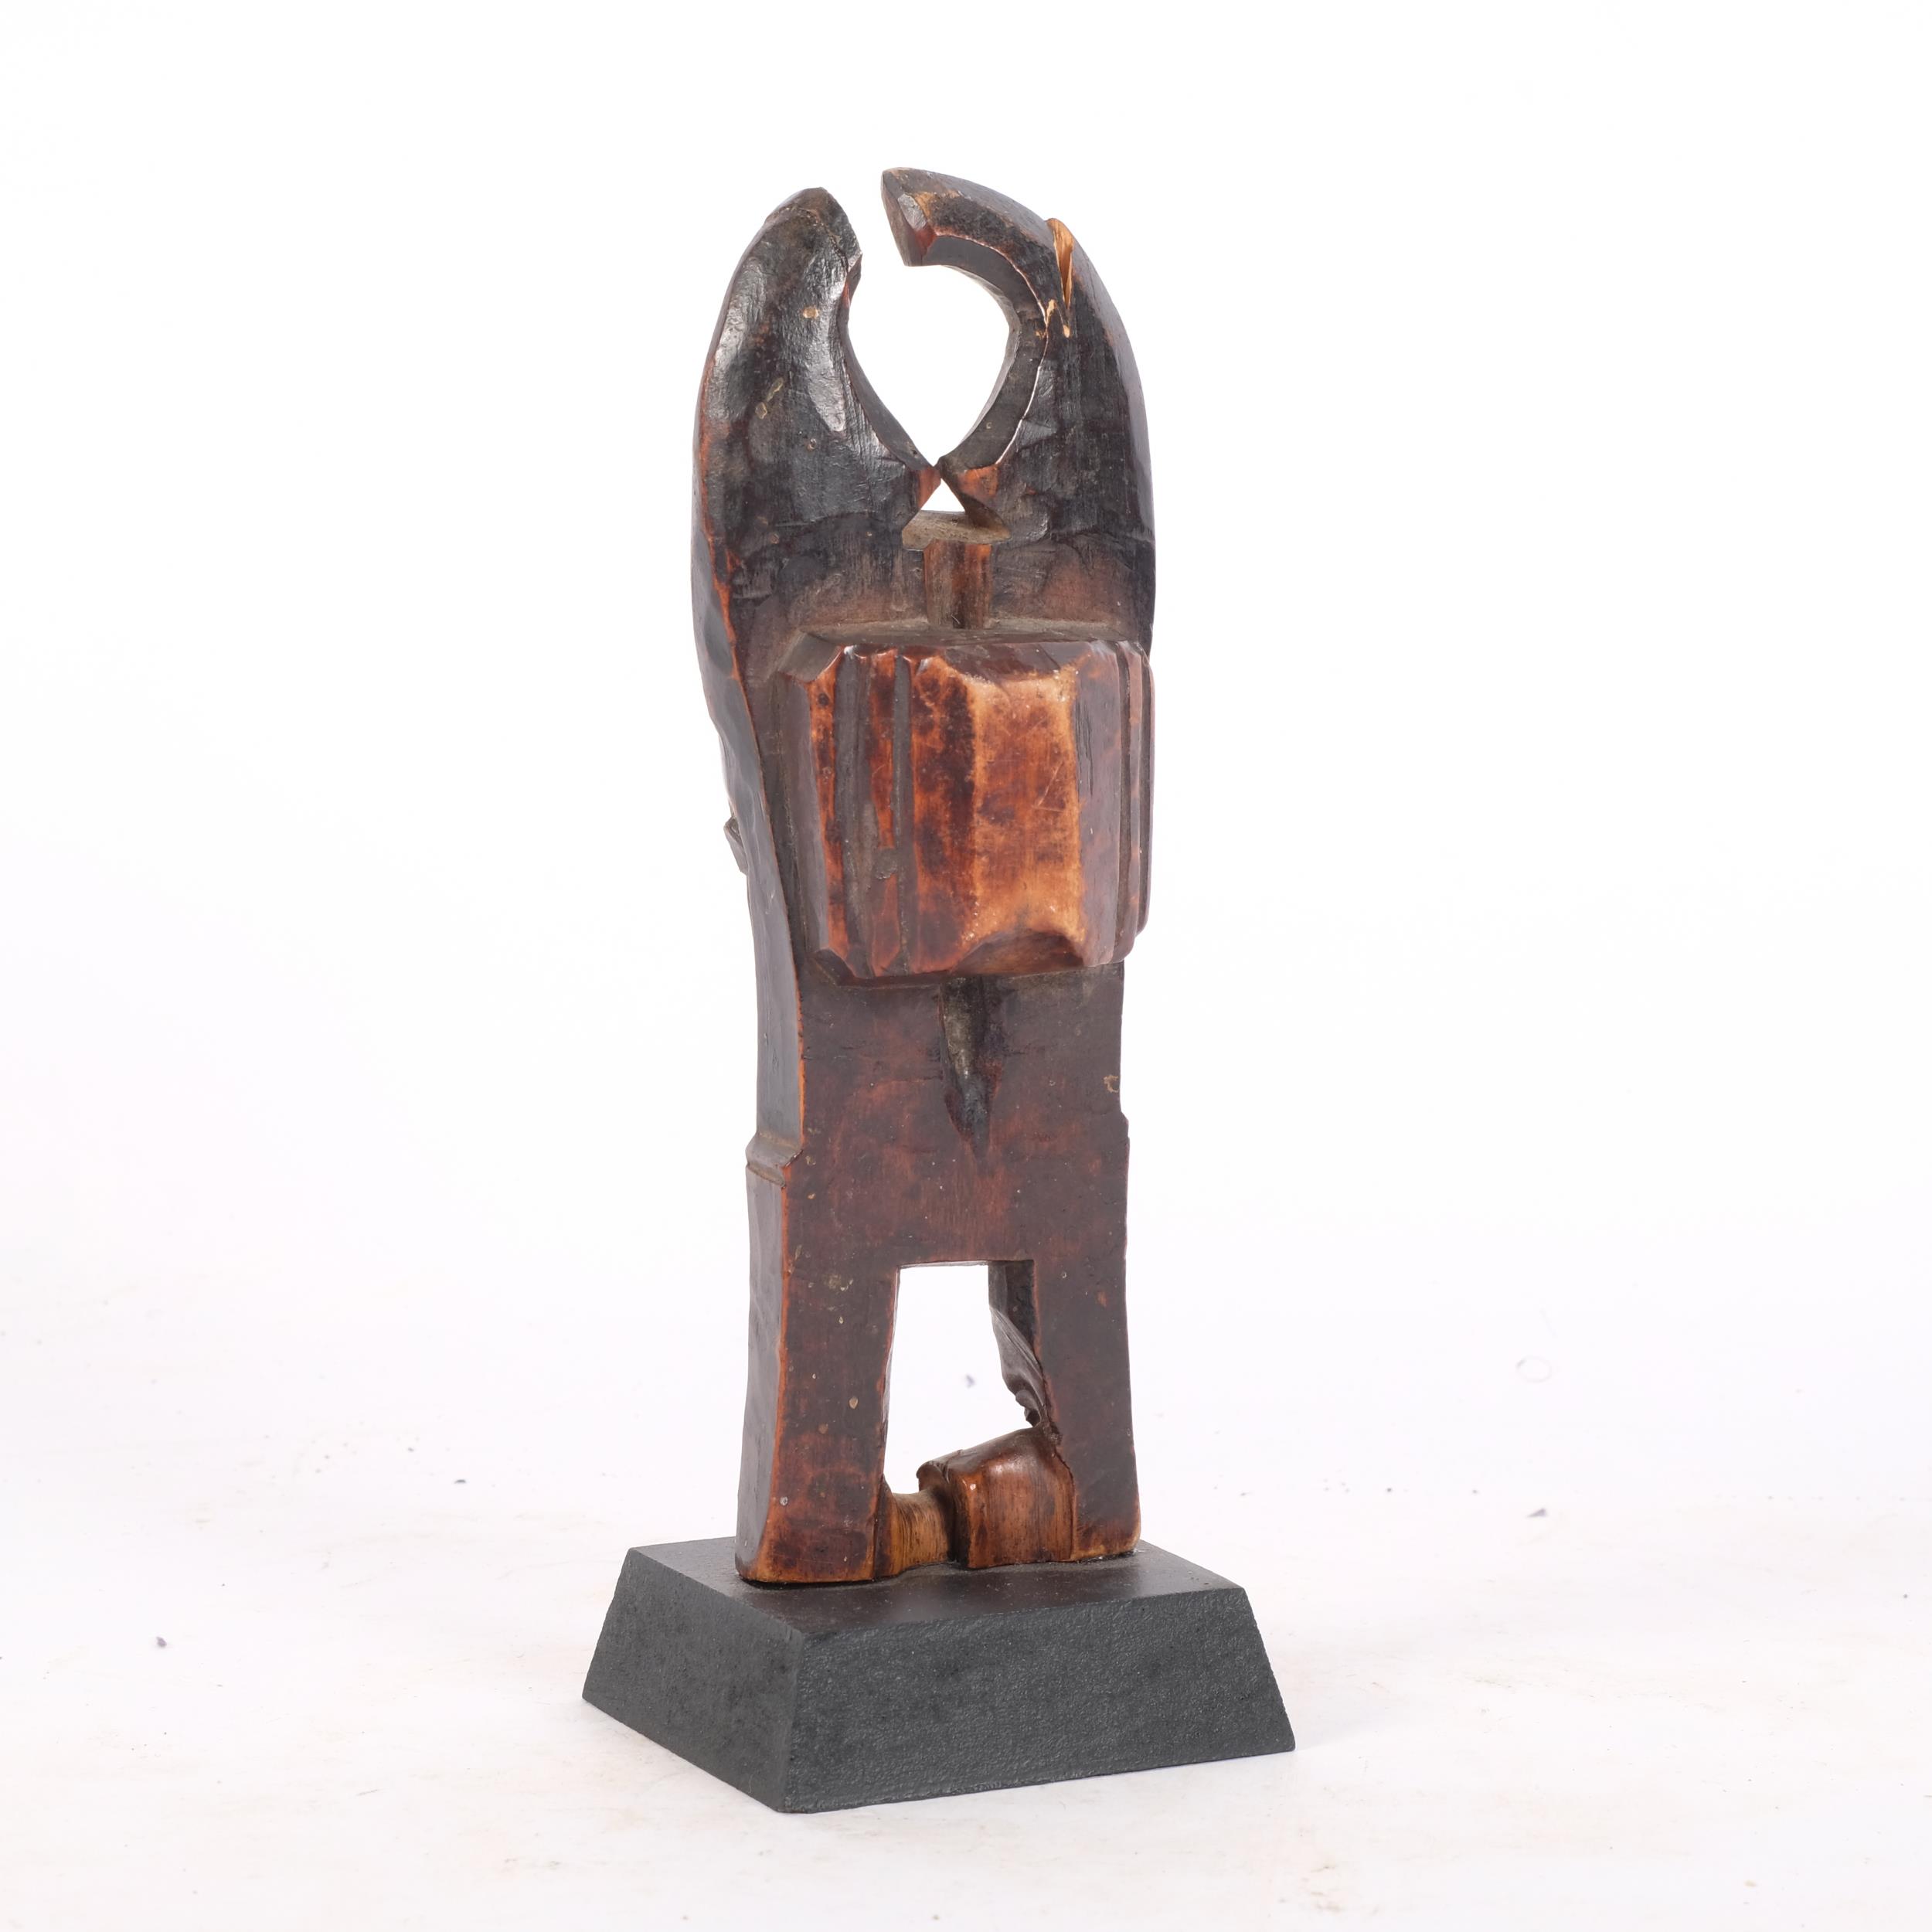 A Baule, Ivory Coast weaving pulley, carved wood masked figure on wooden plinth, height 16cm Break - Image 2 of 2